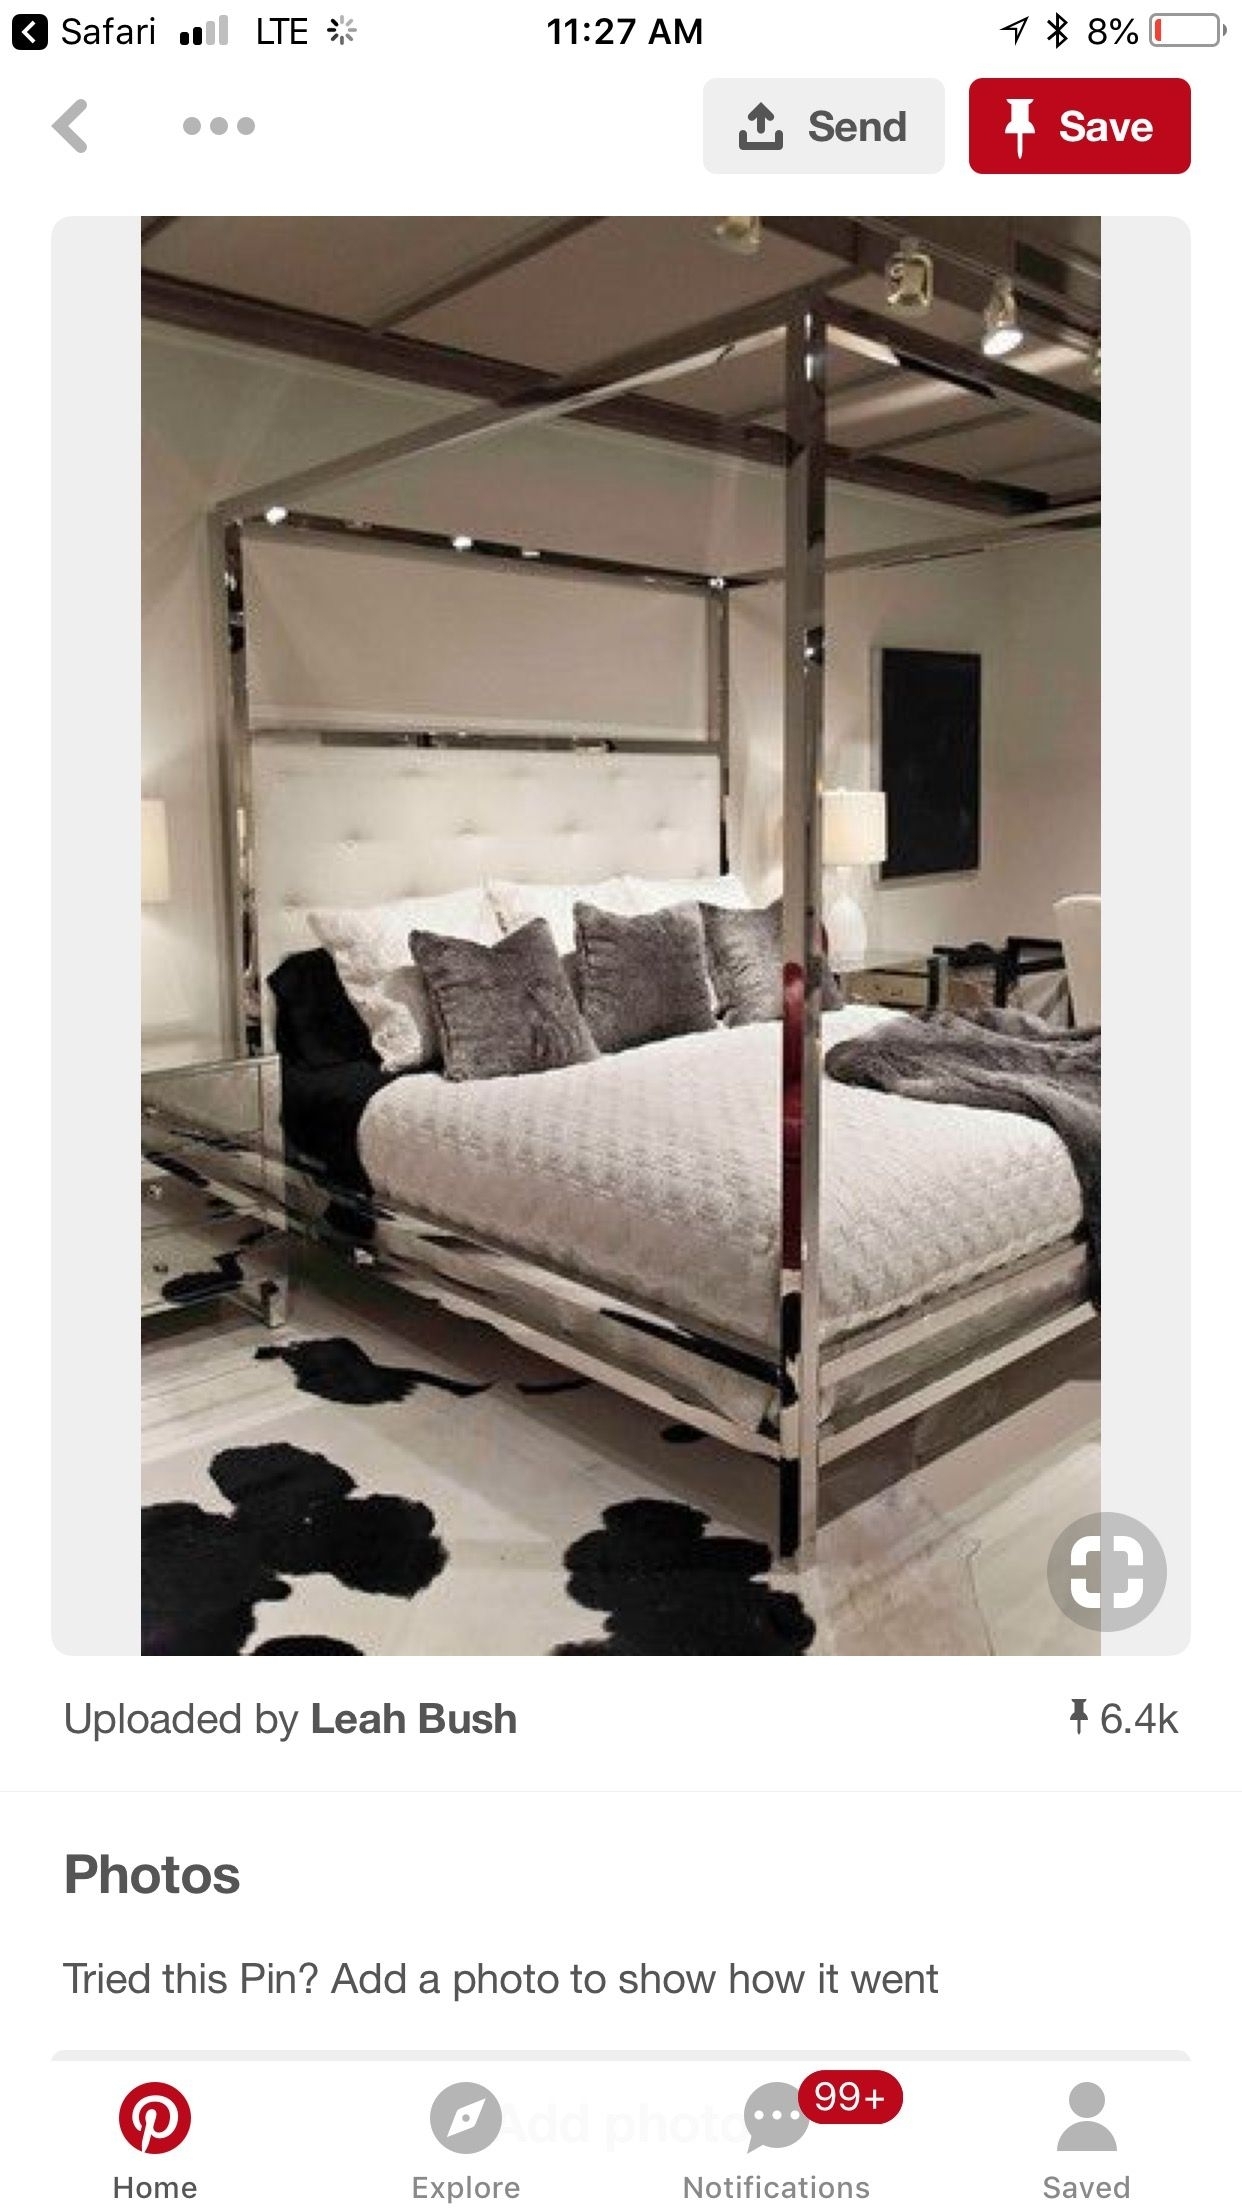 Chrome Bedroom Furniture Ideas On Foter